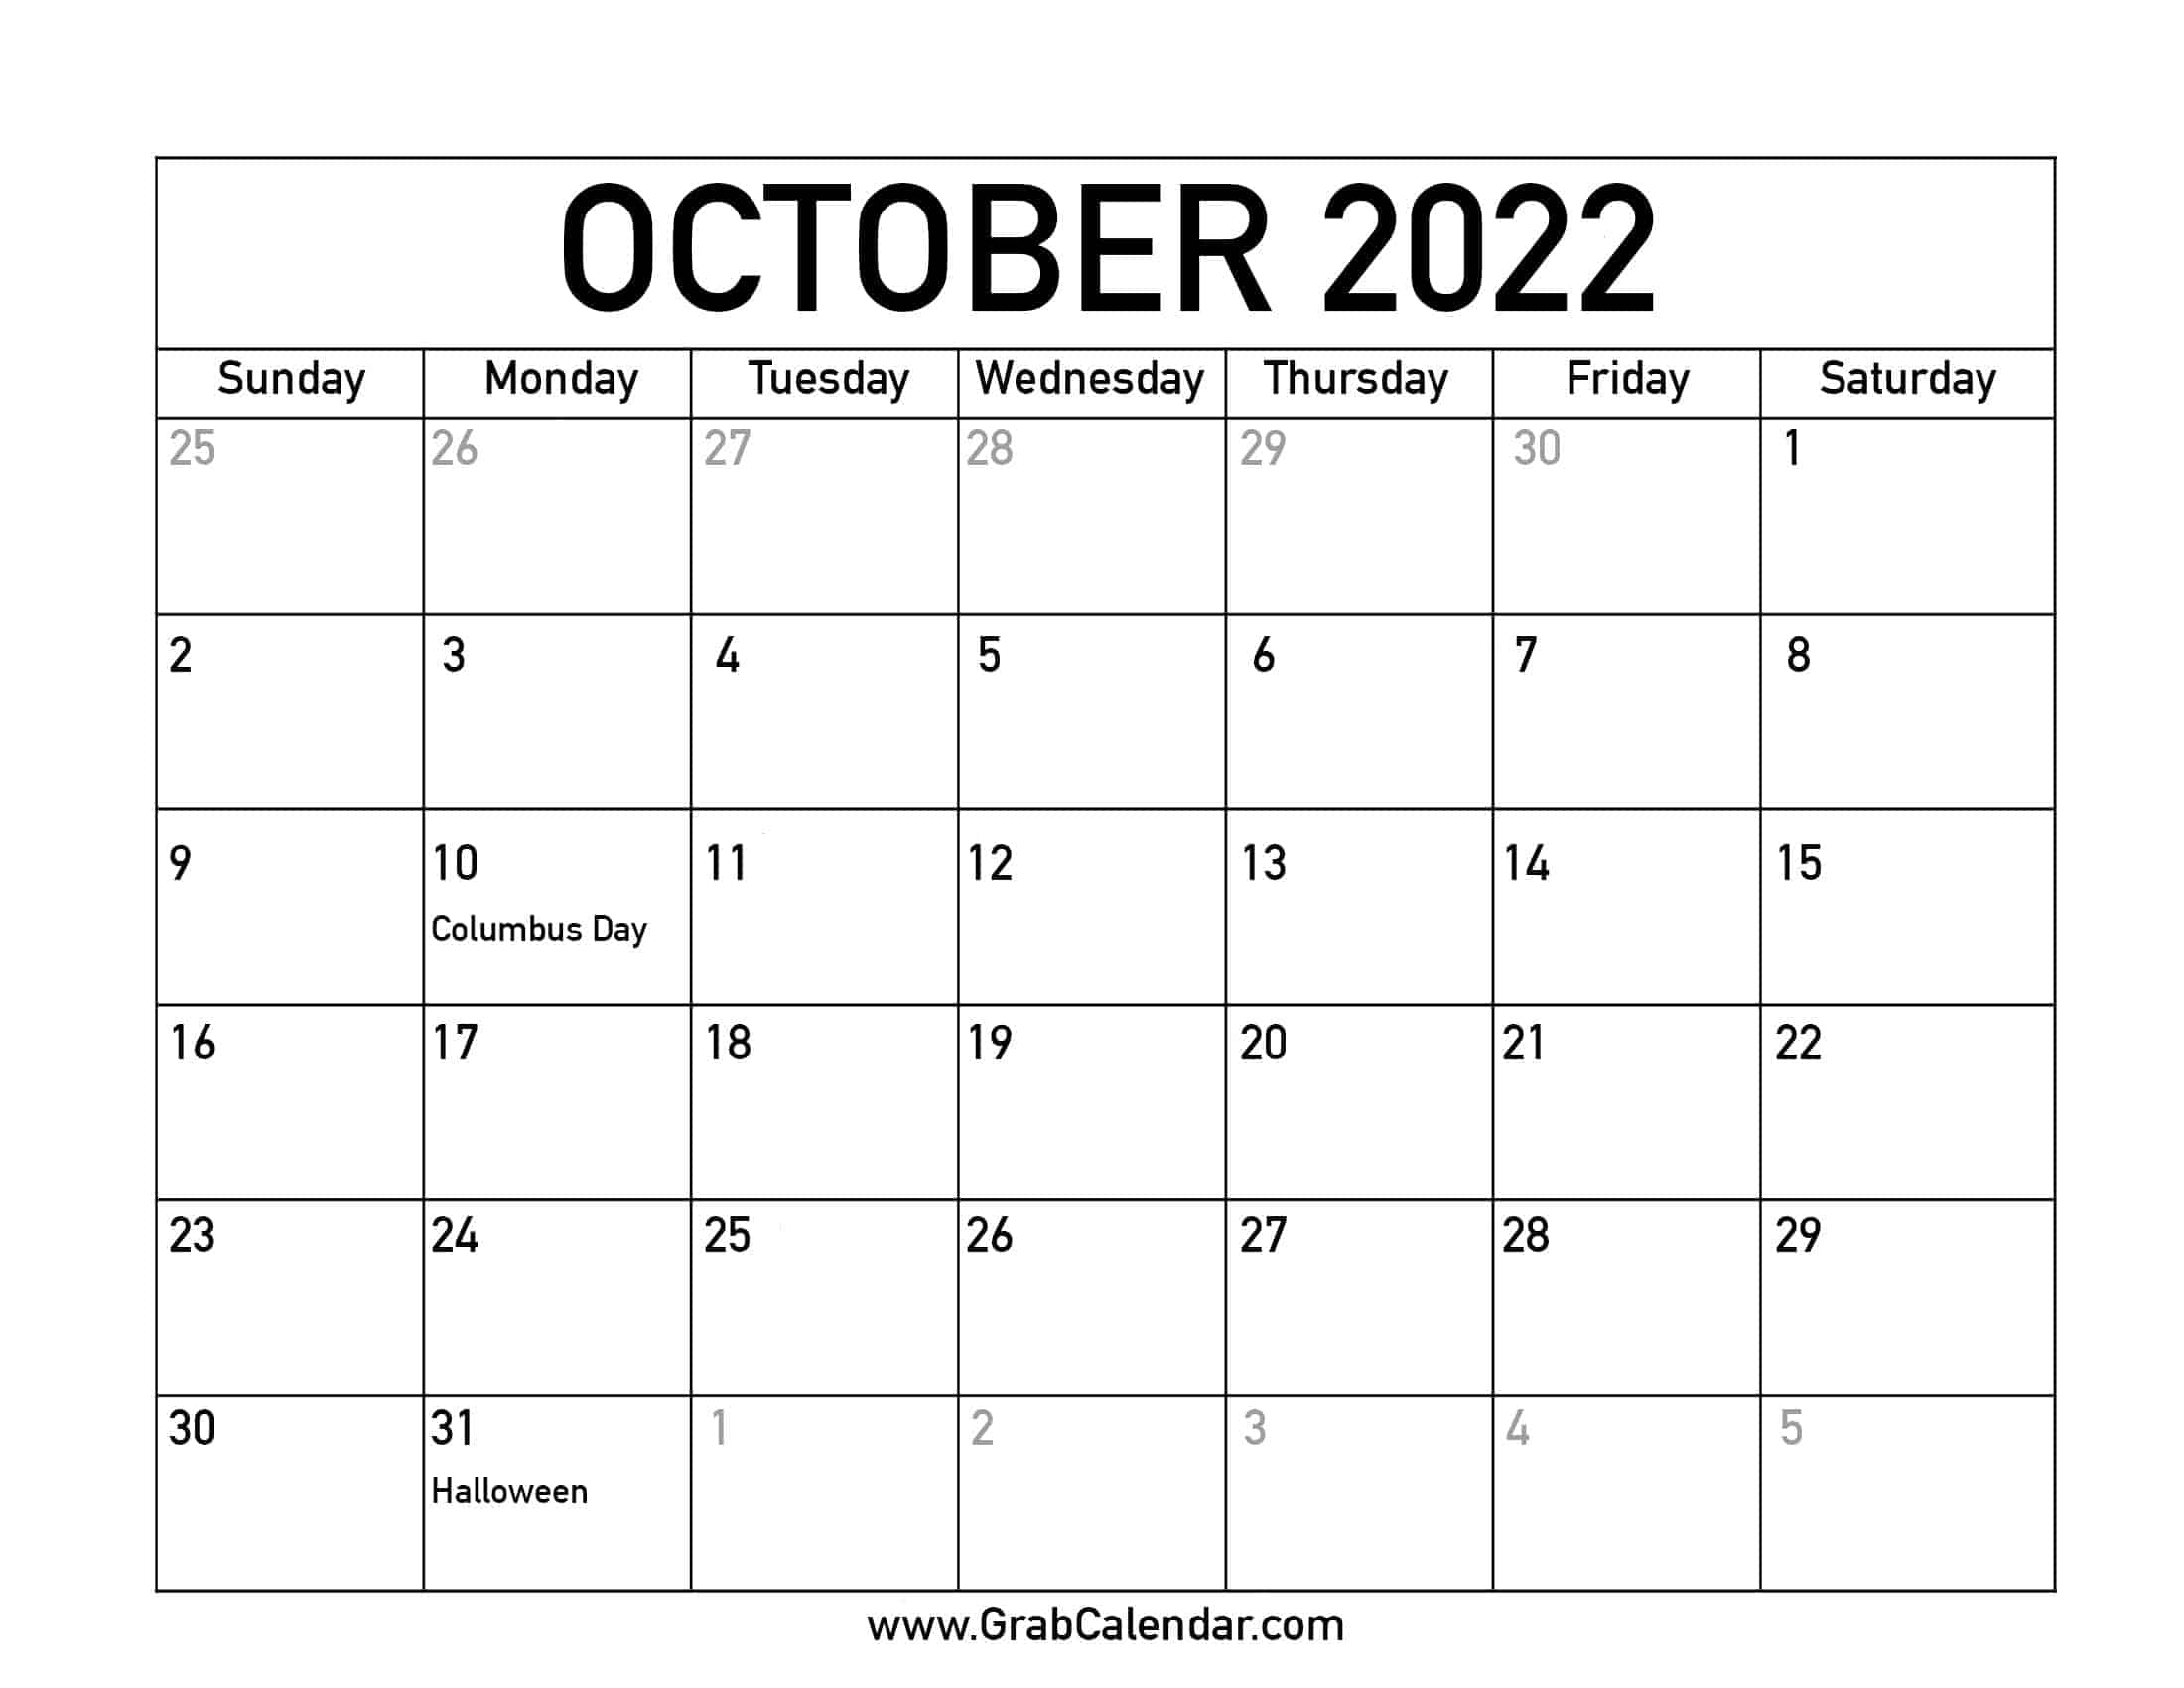 Oct 2022 Calendar With Holidays Printable October 2022 Calendar